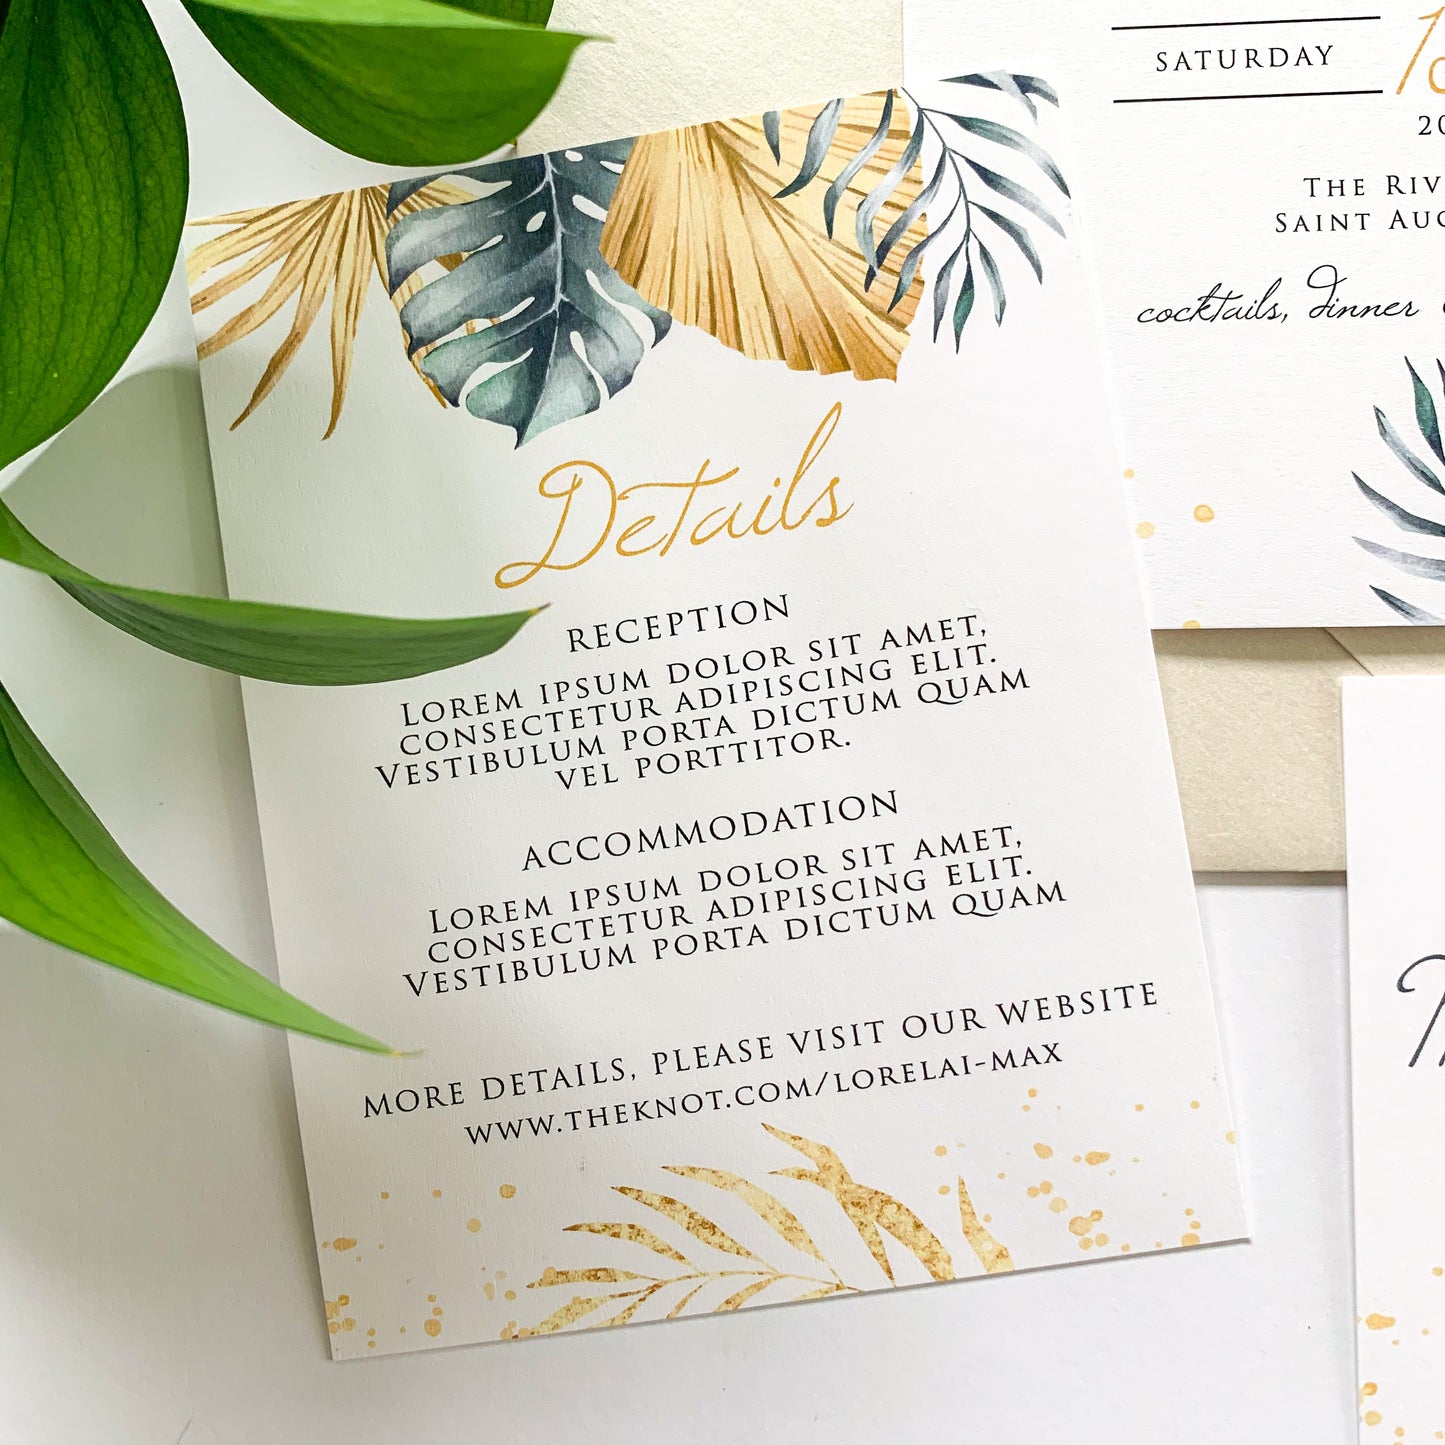 Golden Palms Wedding Invitation Suite